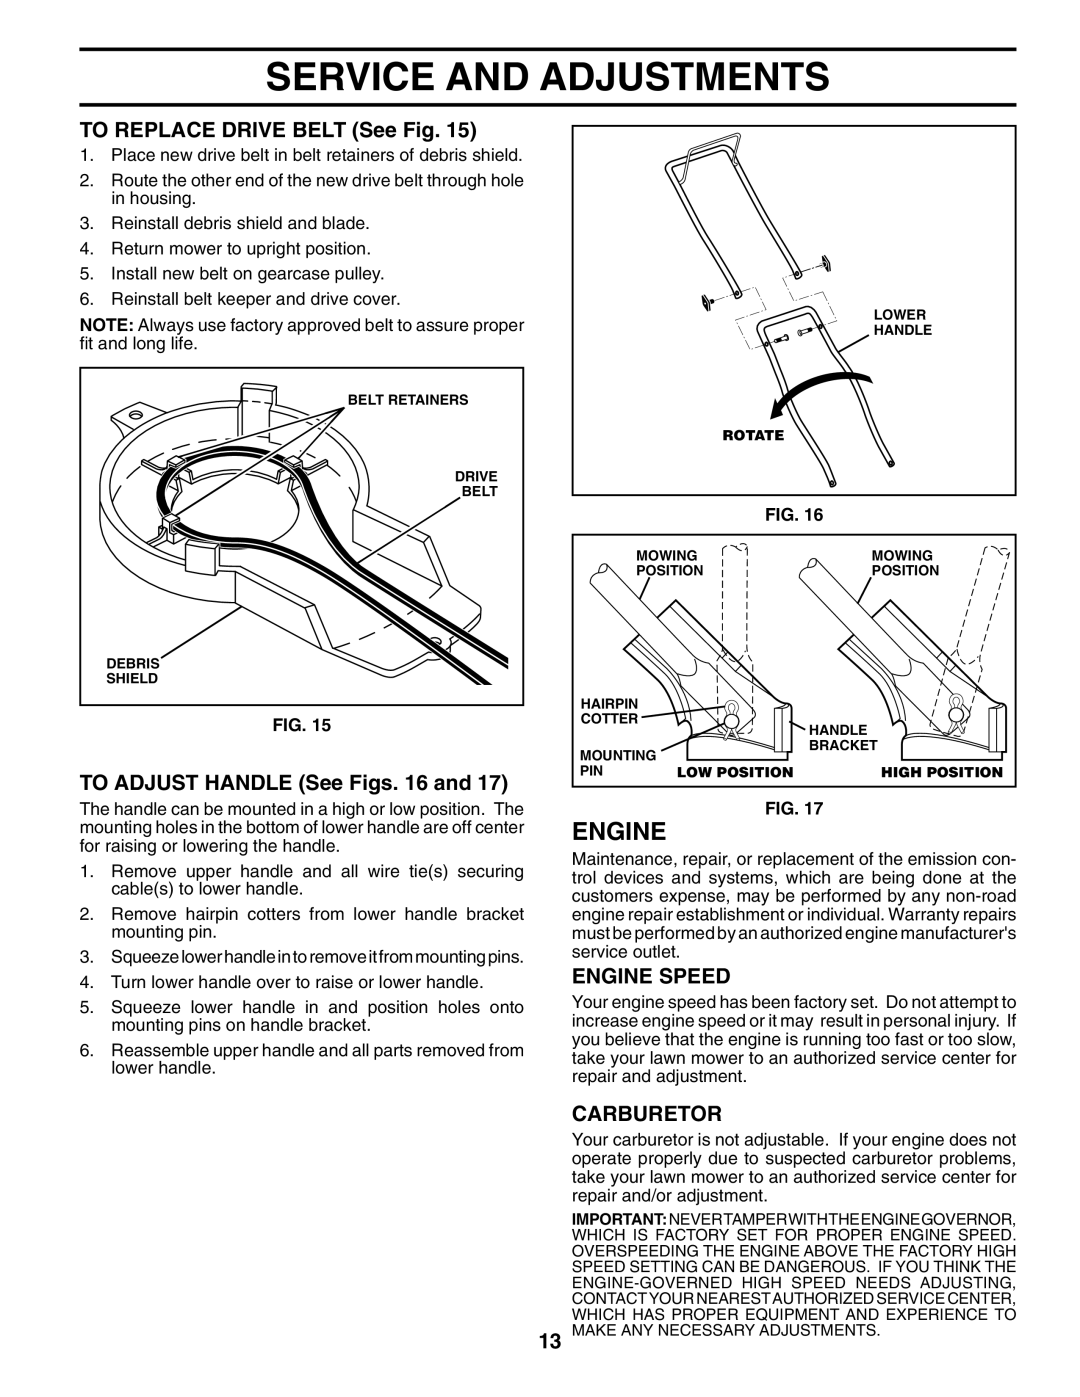 Husqvarna 961330018 owner manual To Replace Drive Belt See Fig, To Adjust Handle See Figs, Carburetor 